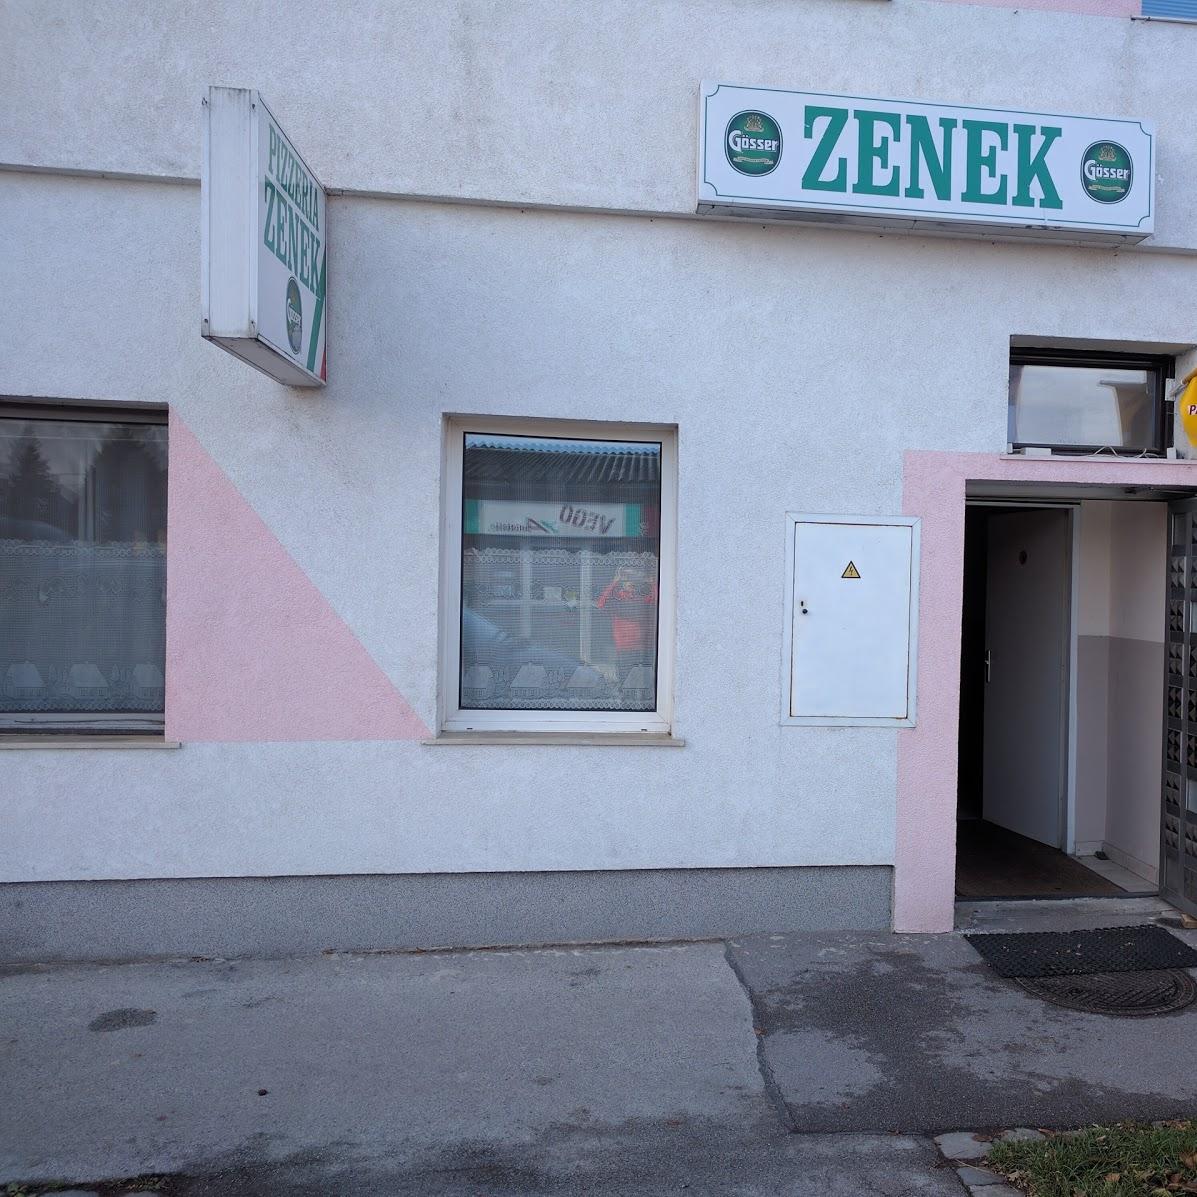 Restaurant "Pizzeria Zenek" in Gramatneusiedl